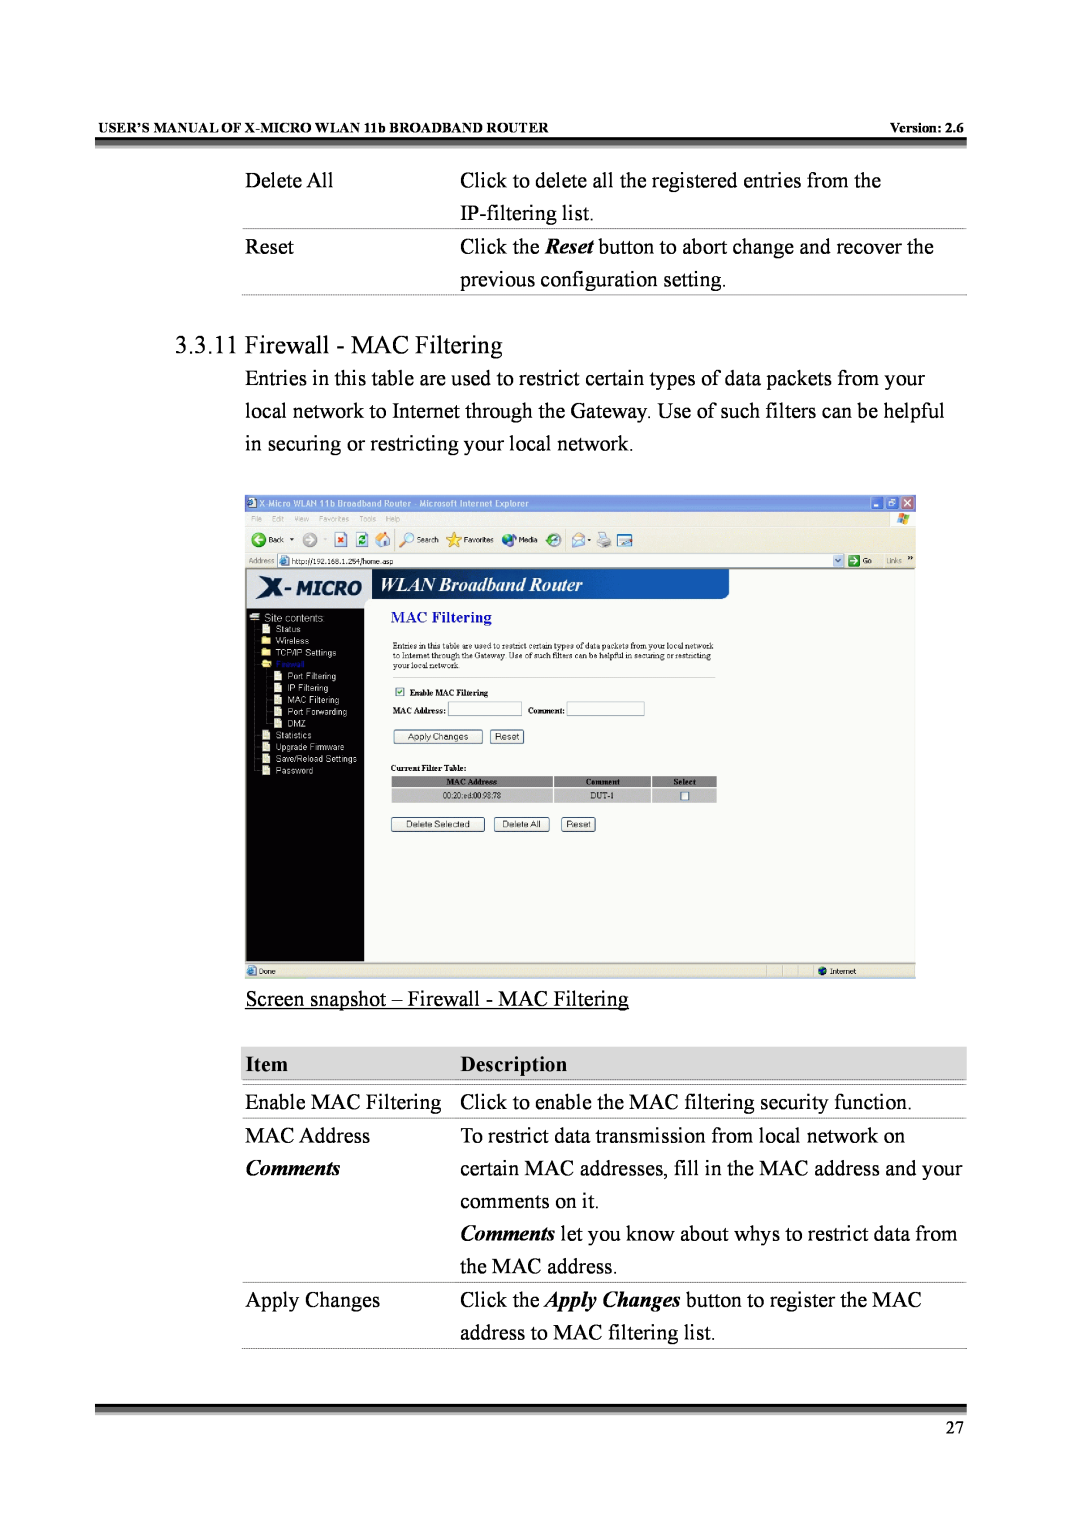 X-Micro Tech IEEE 802.11b user manual Firewall - MAC Filtering, Description 